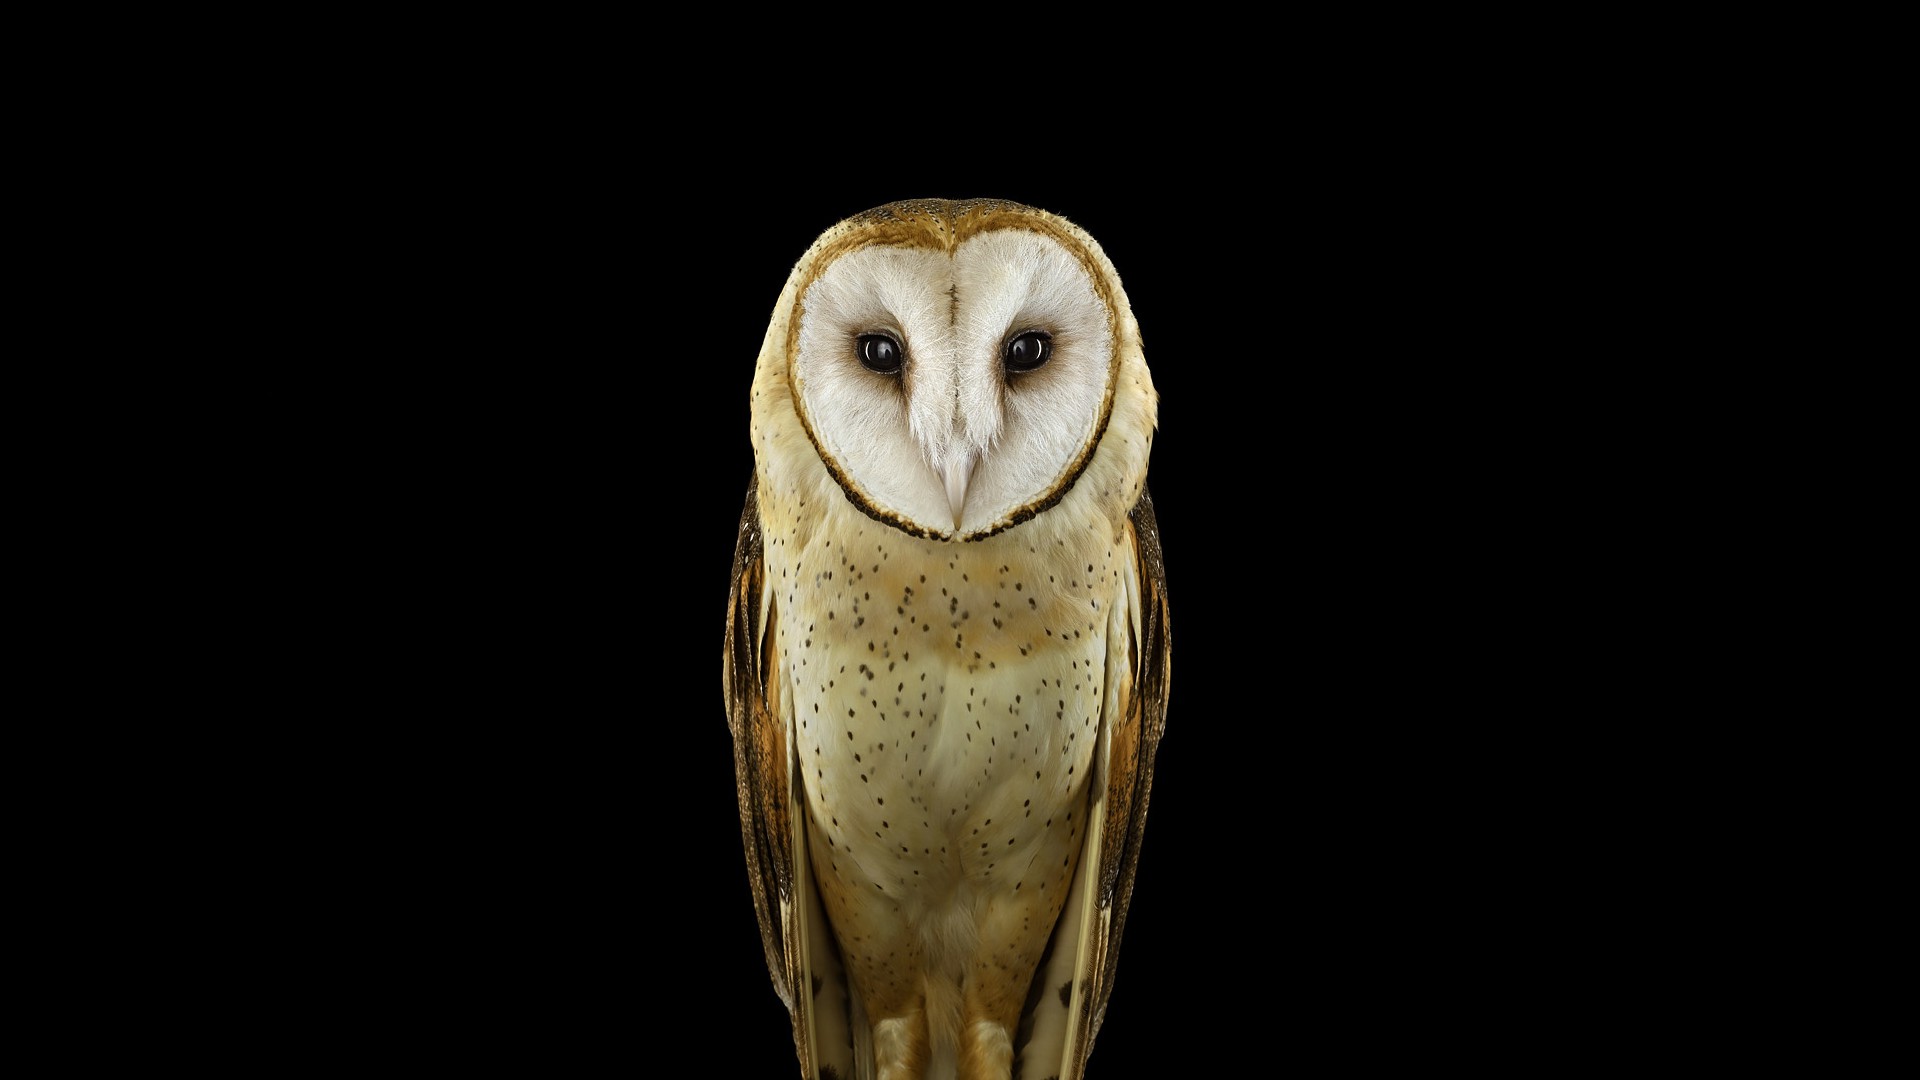 simple desktops owl